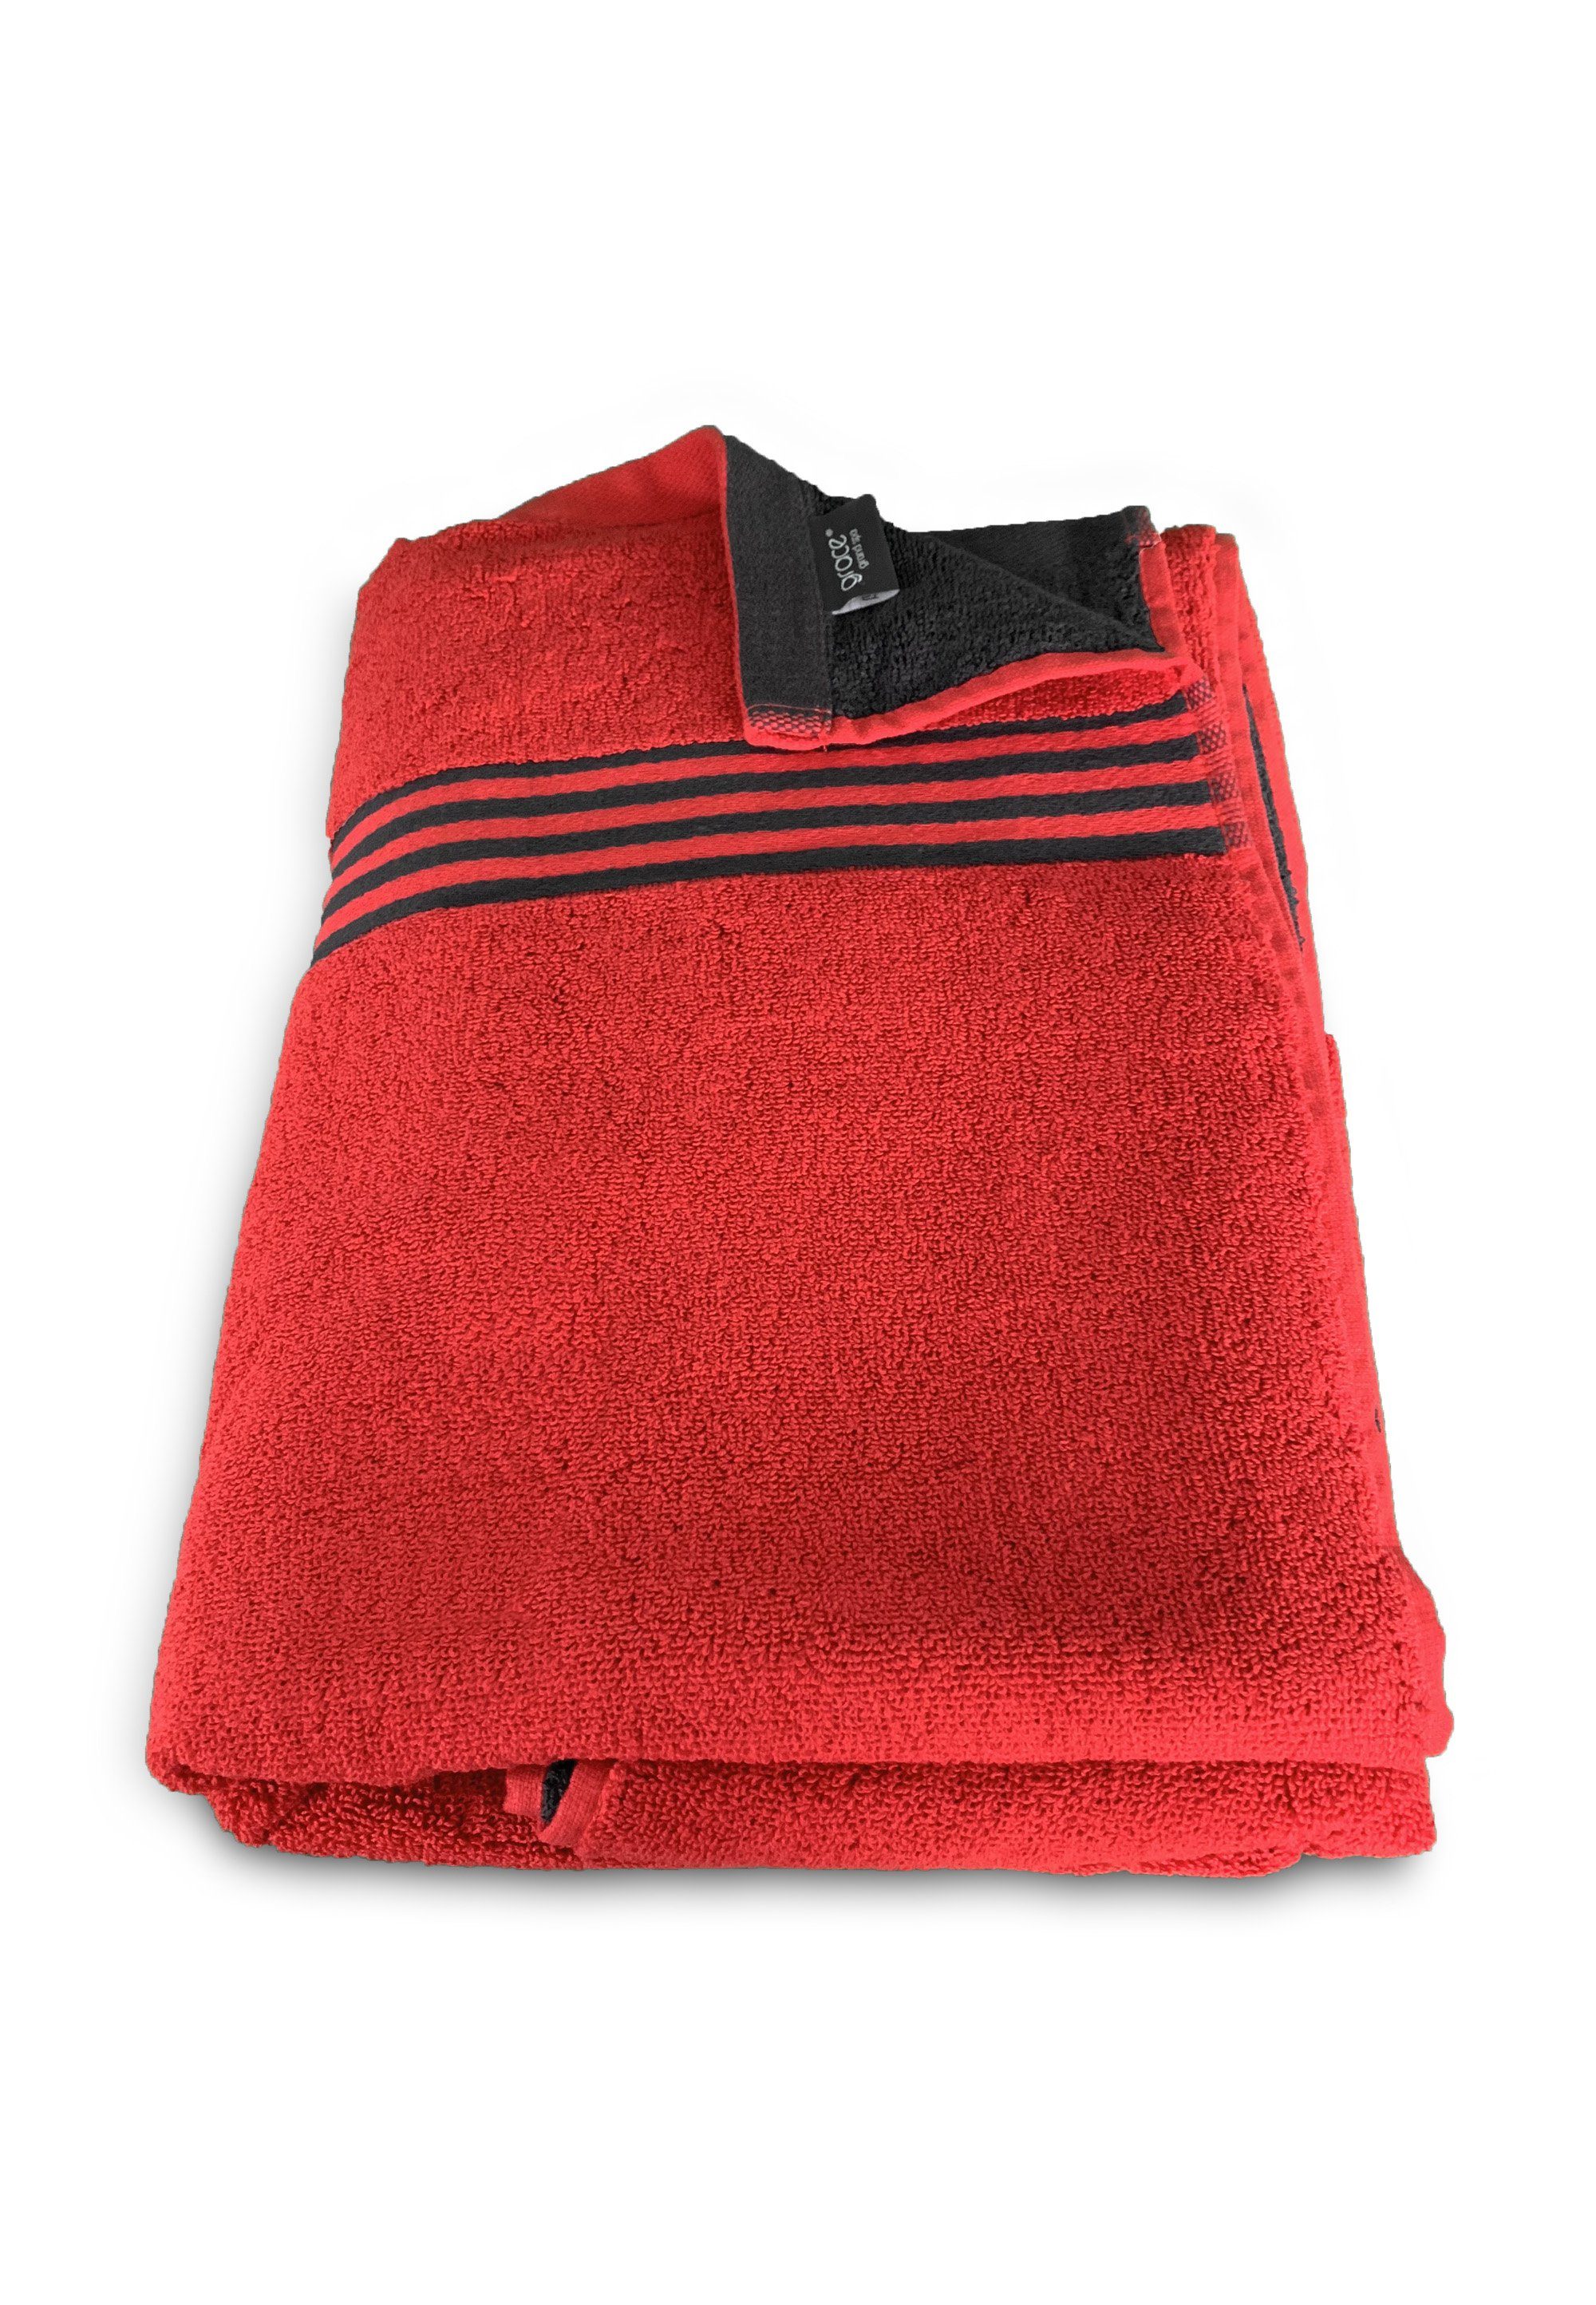 grace grand spa Duschtuch Sports, (1-St), mit farblich abgesetzter Bordüre rot